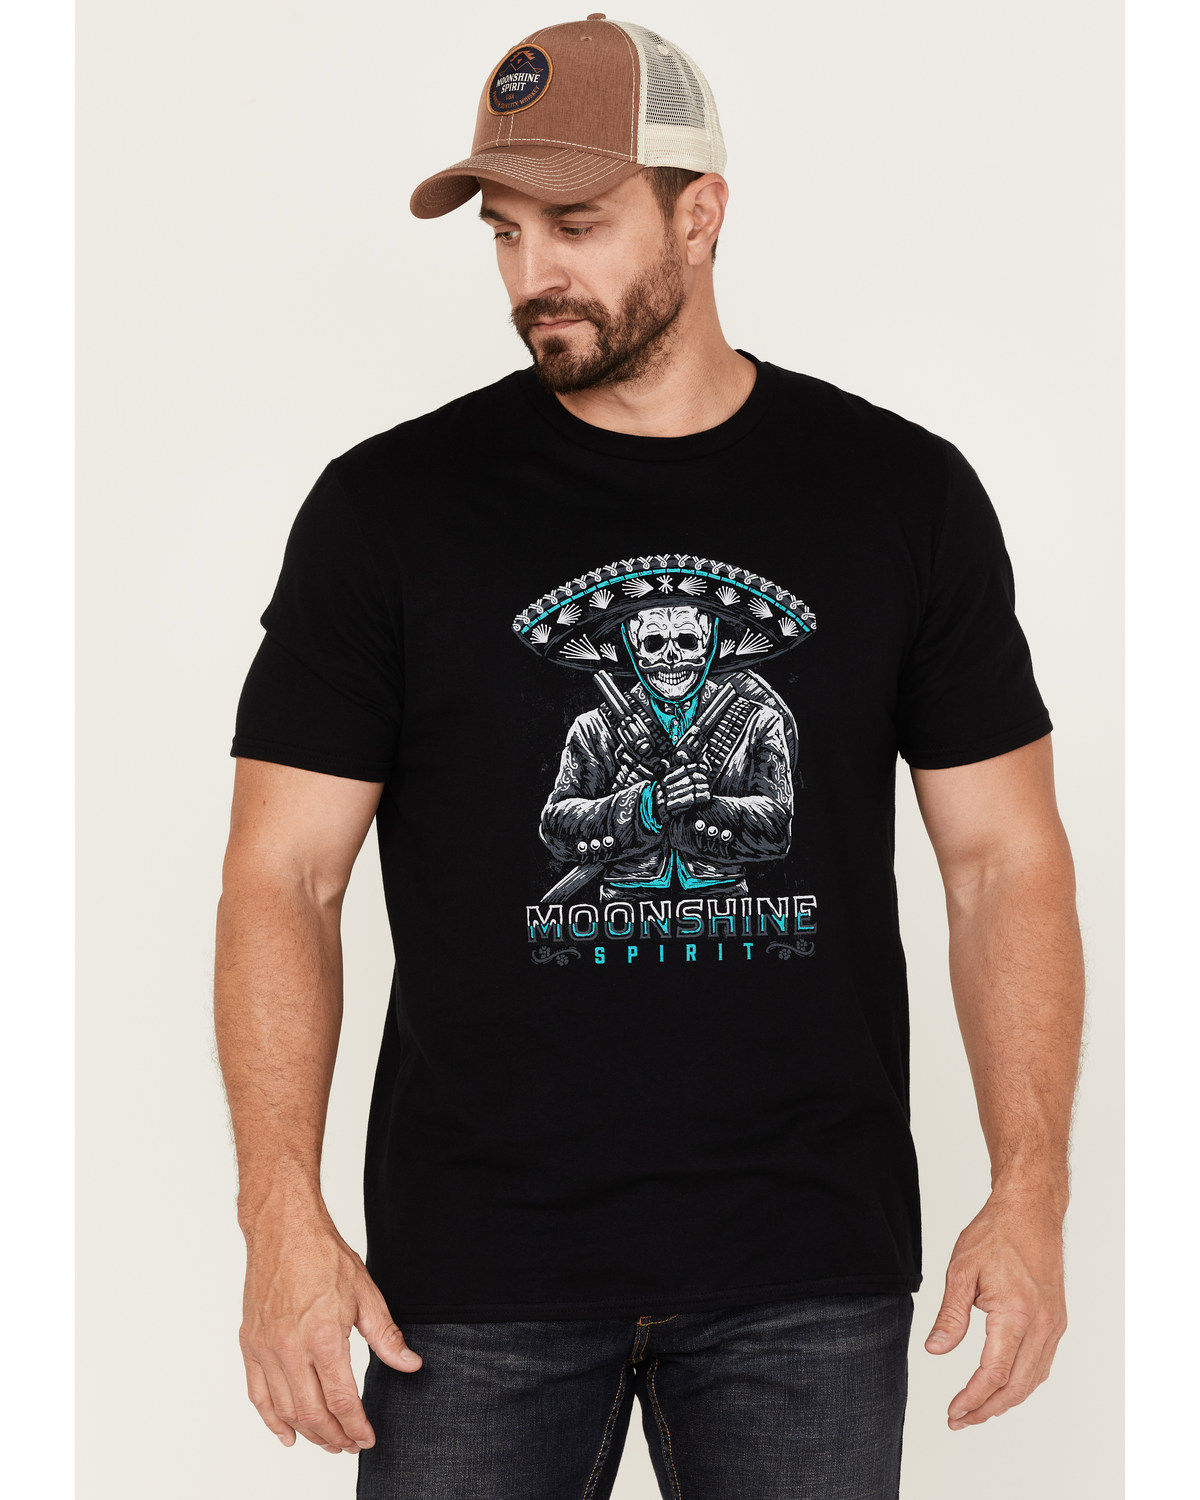 Moonshine Spirit Men's El Mariachi Skull Graphic T-Shirt